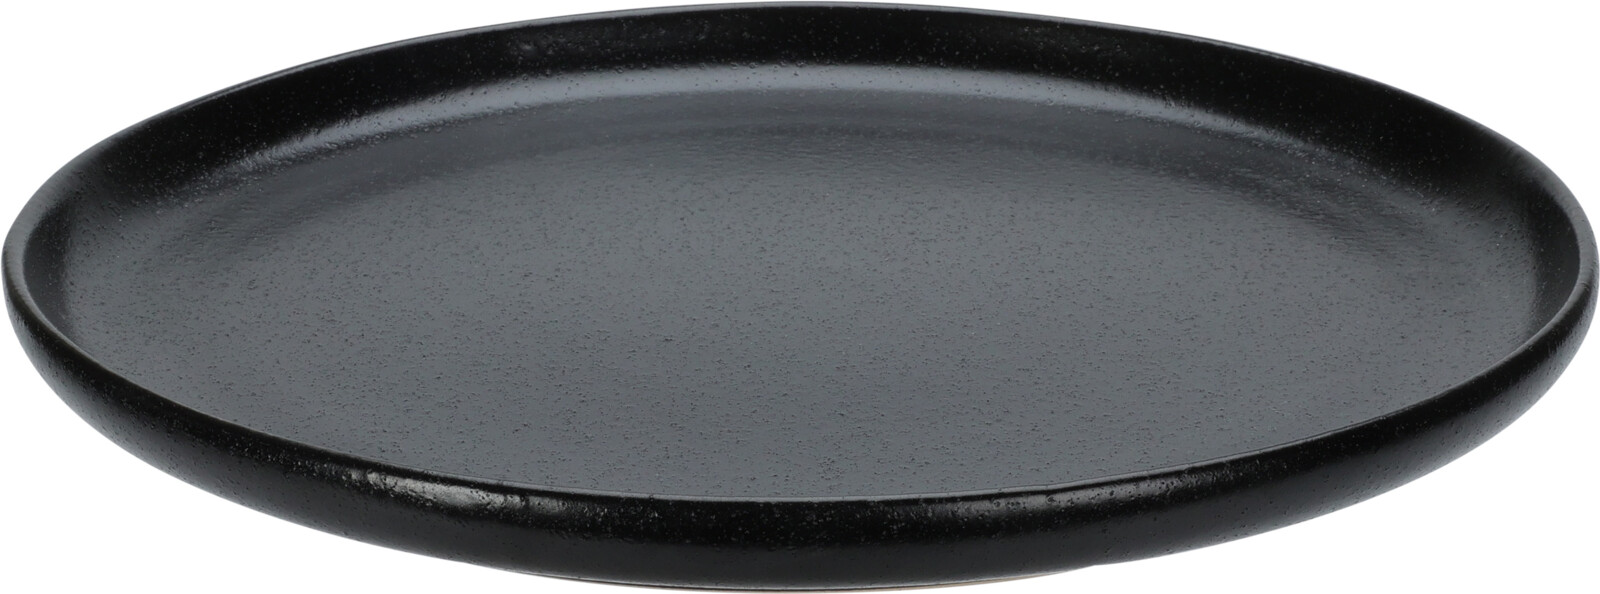 Assiette plate BLACK